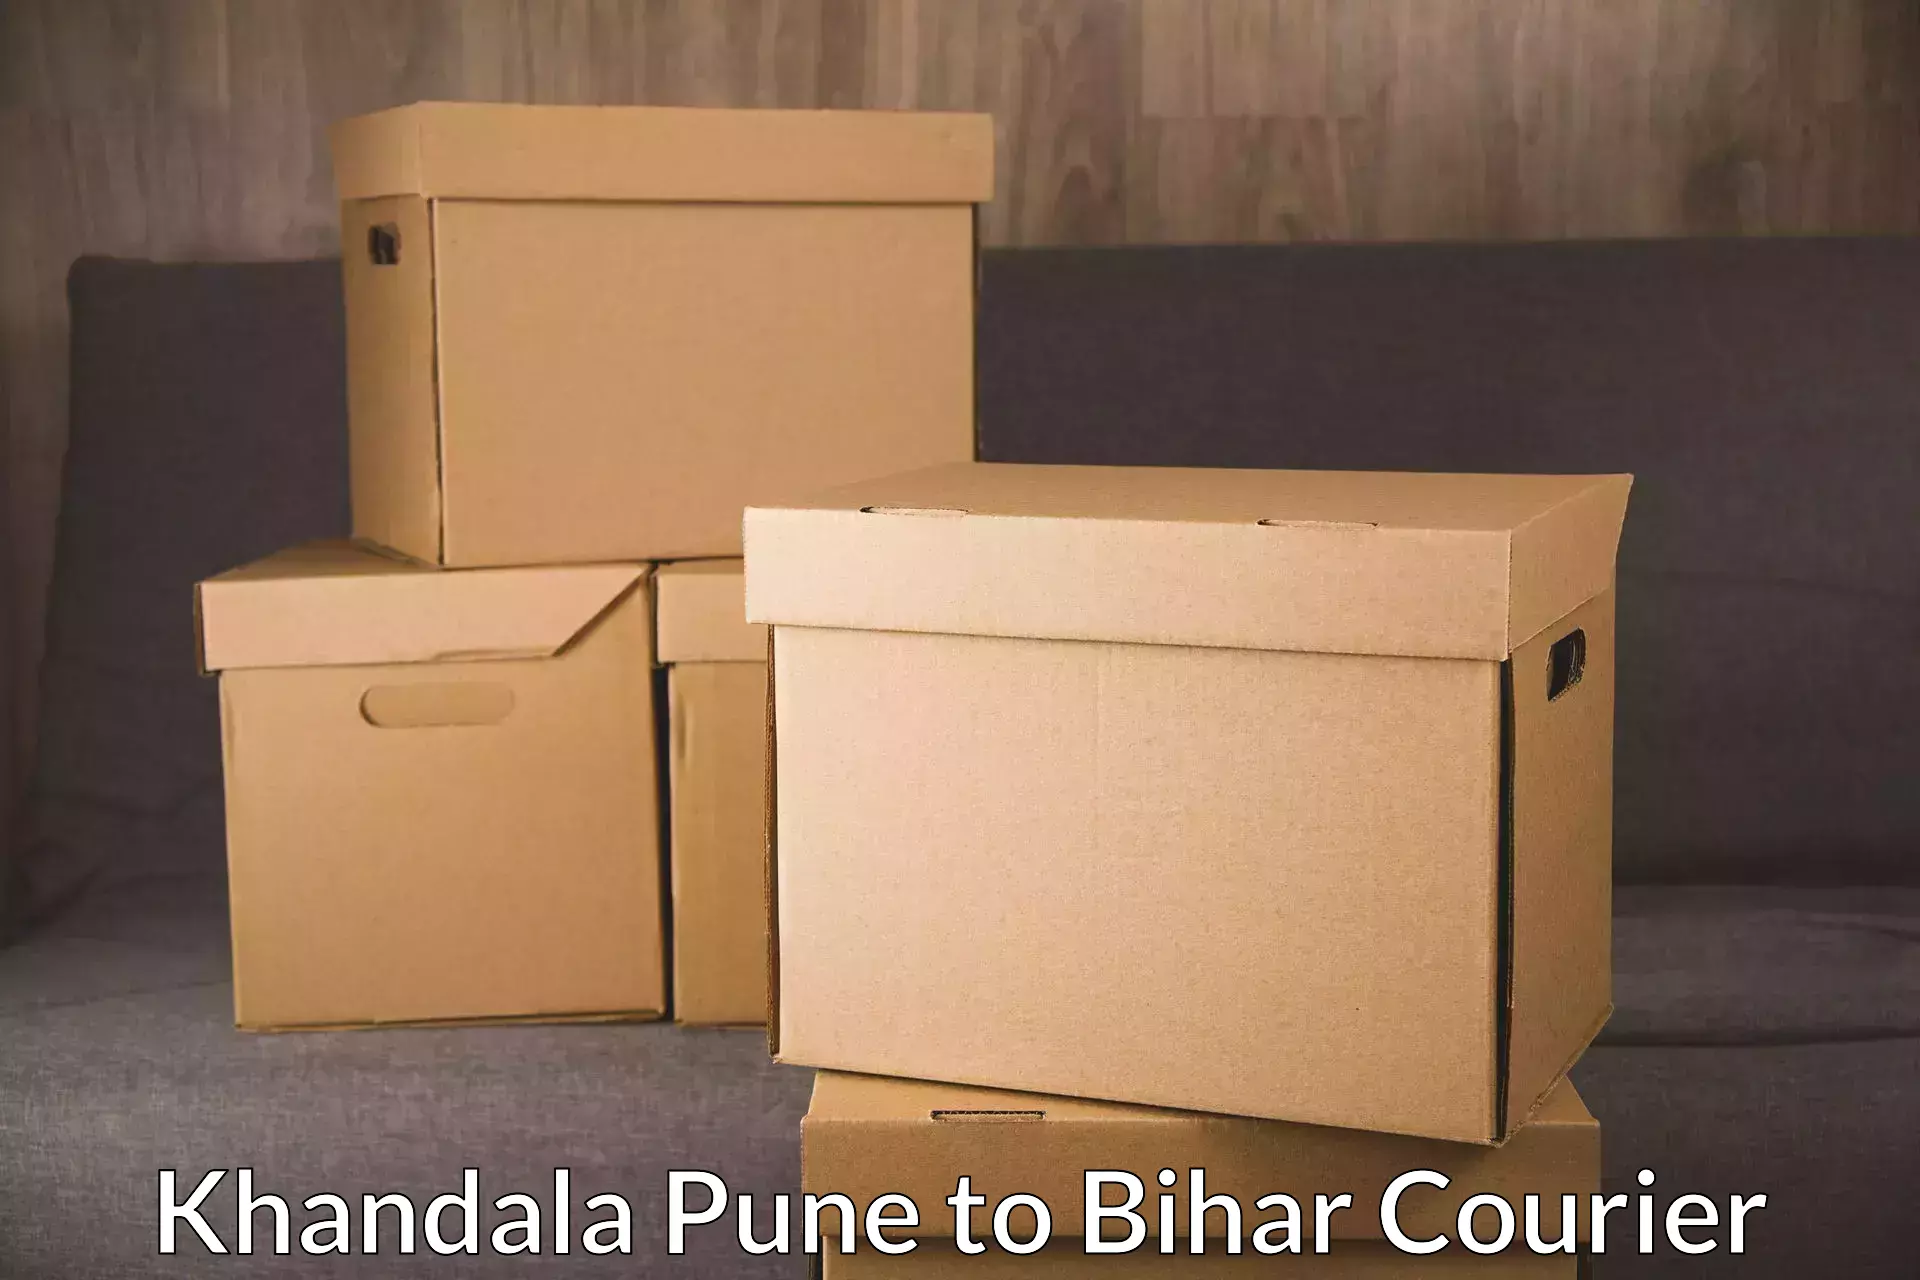 High-capacity parcel service Khandala Pune to Bihar